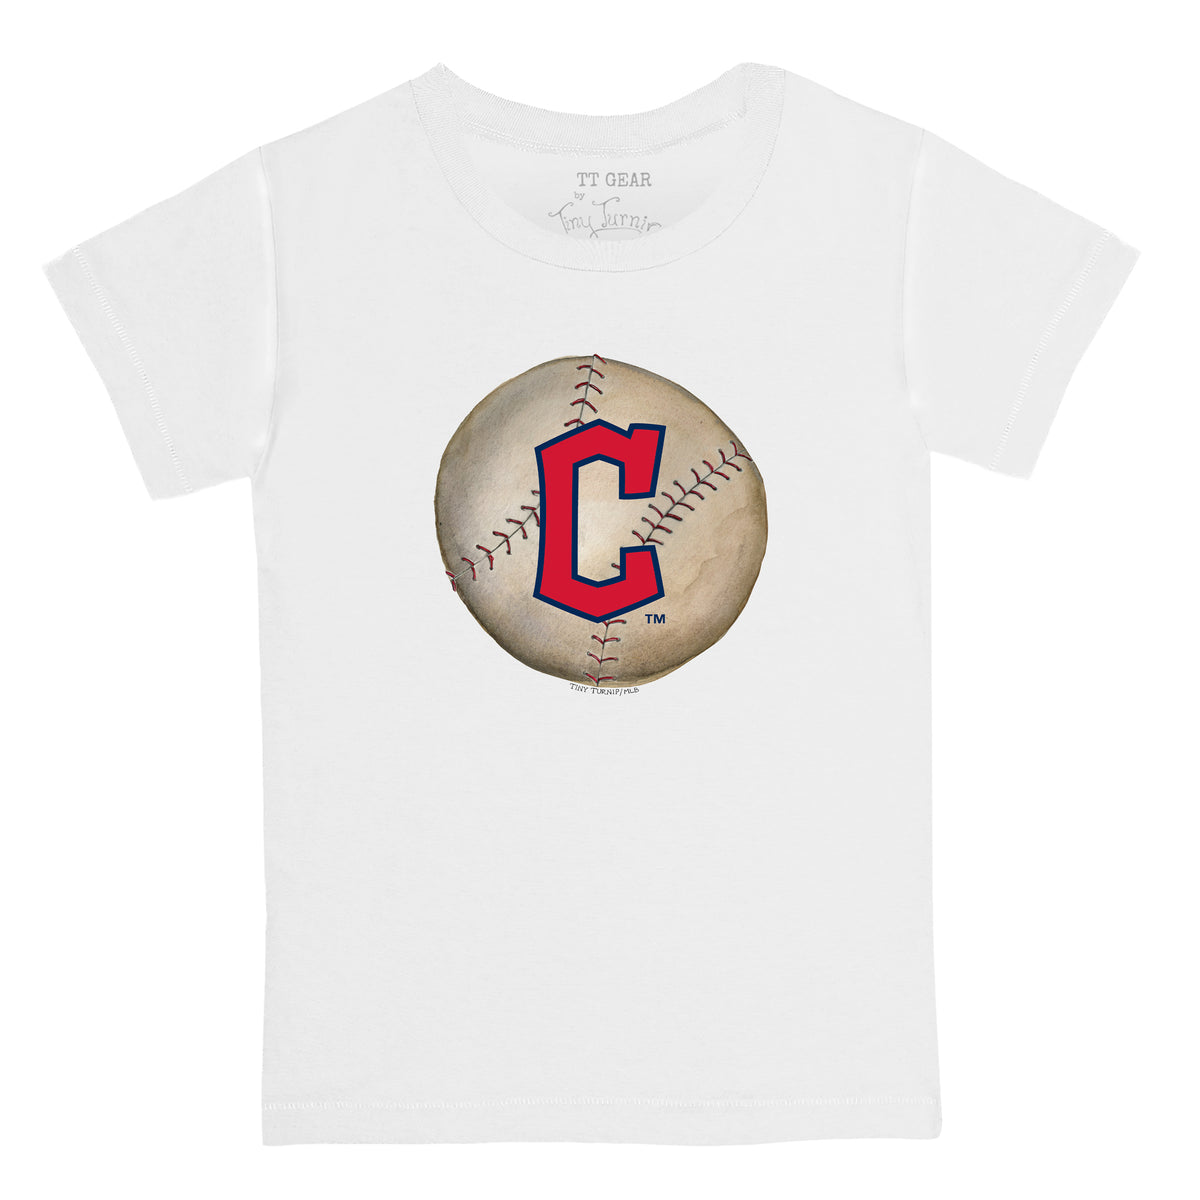 Tiny Turnip St. Louis Cardinals Stitched Baseball Tee Shirt Youth Large (10-12) / White